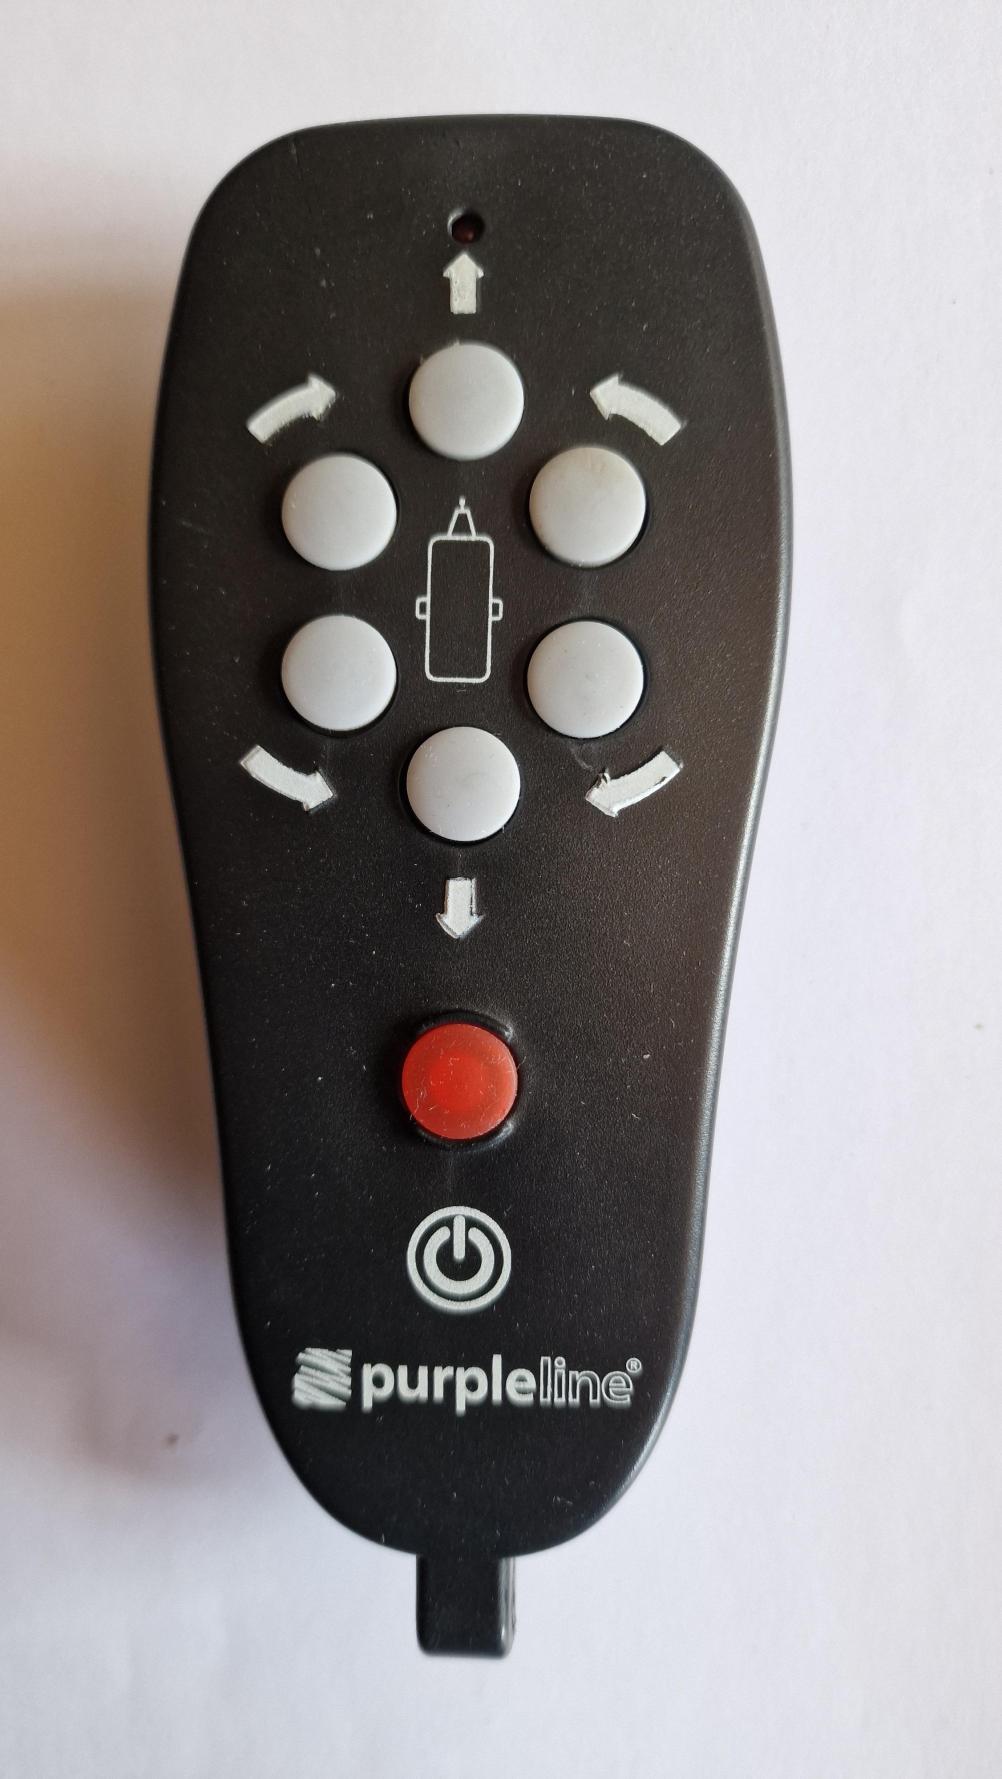 PURPLELINE  Remote Control - Front Image